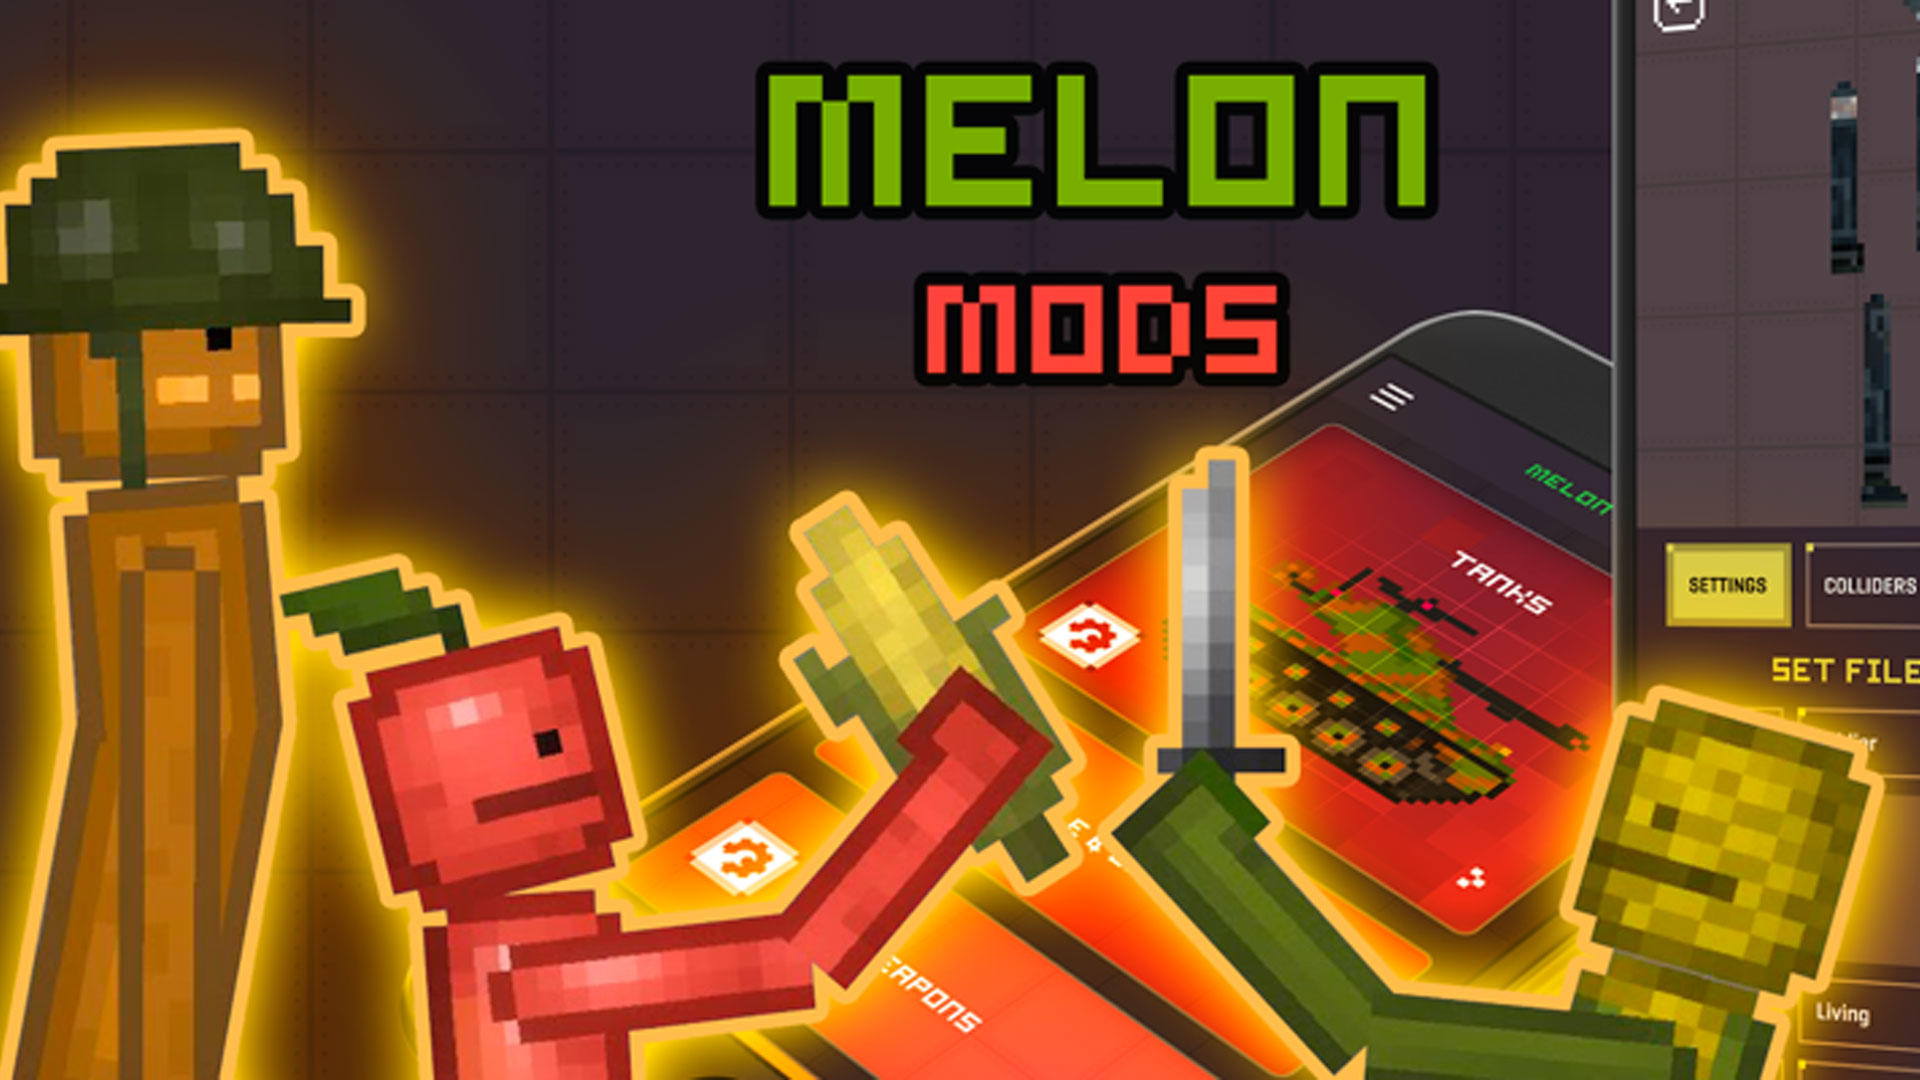 Robot Mod Melon Playground - Apps on Google Play